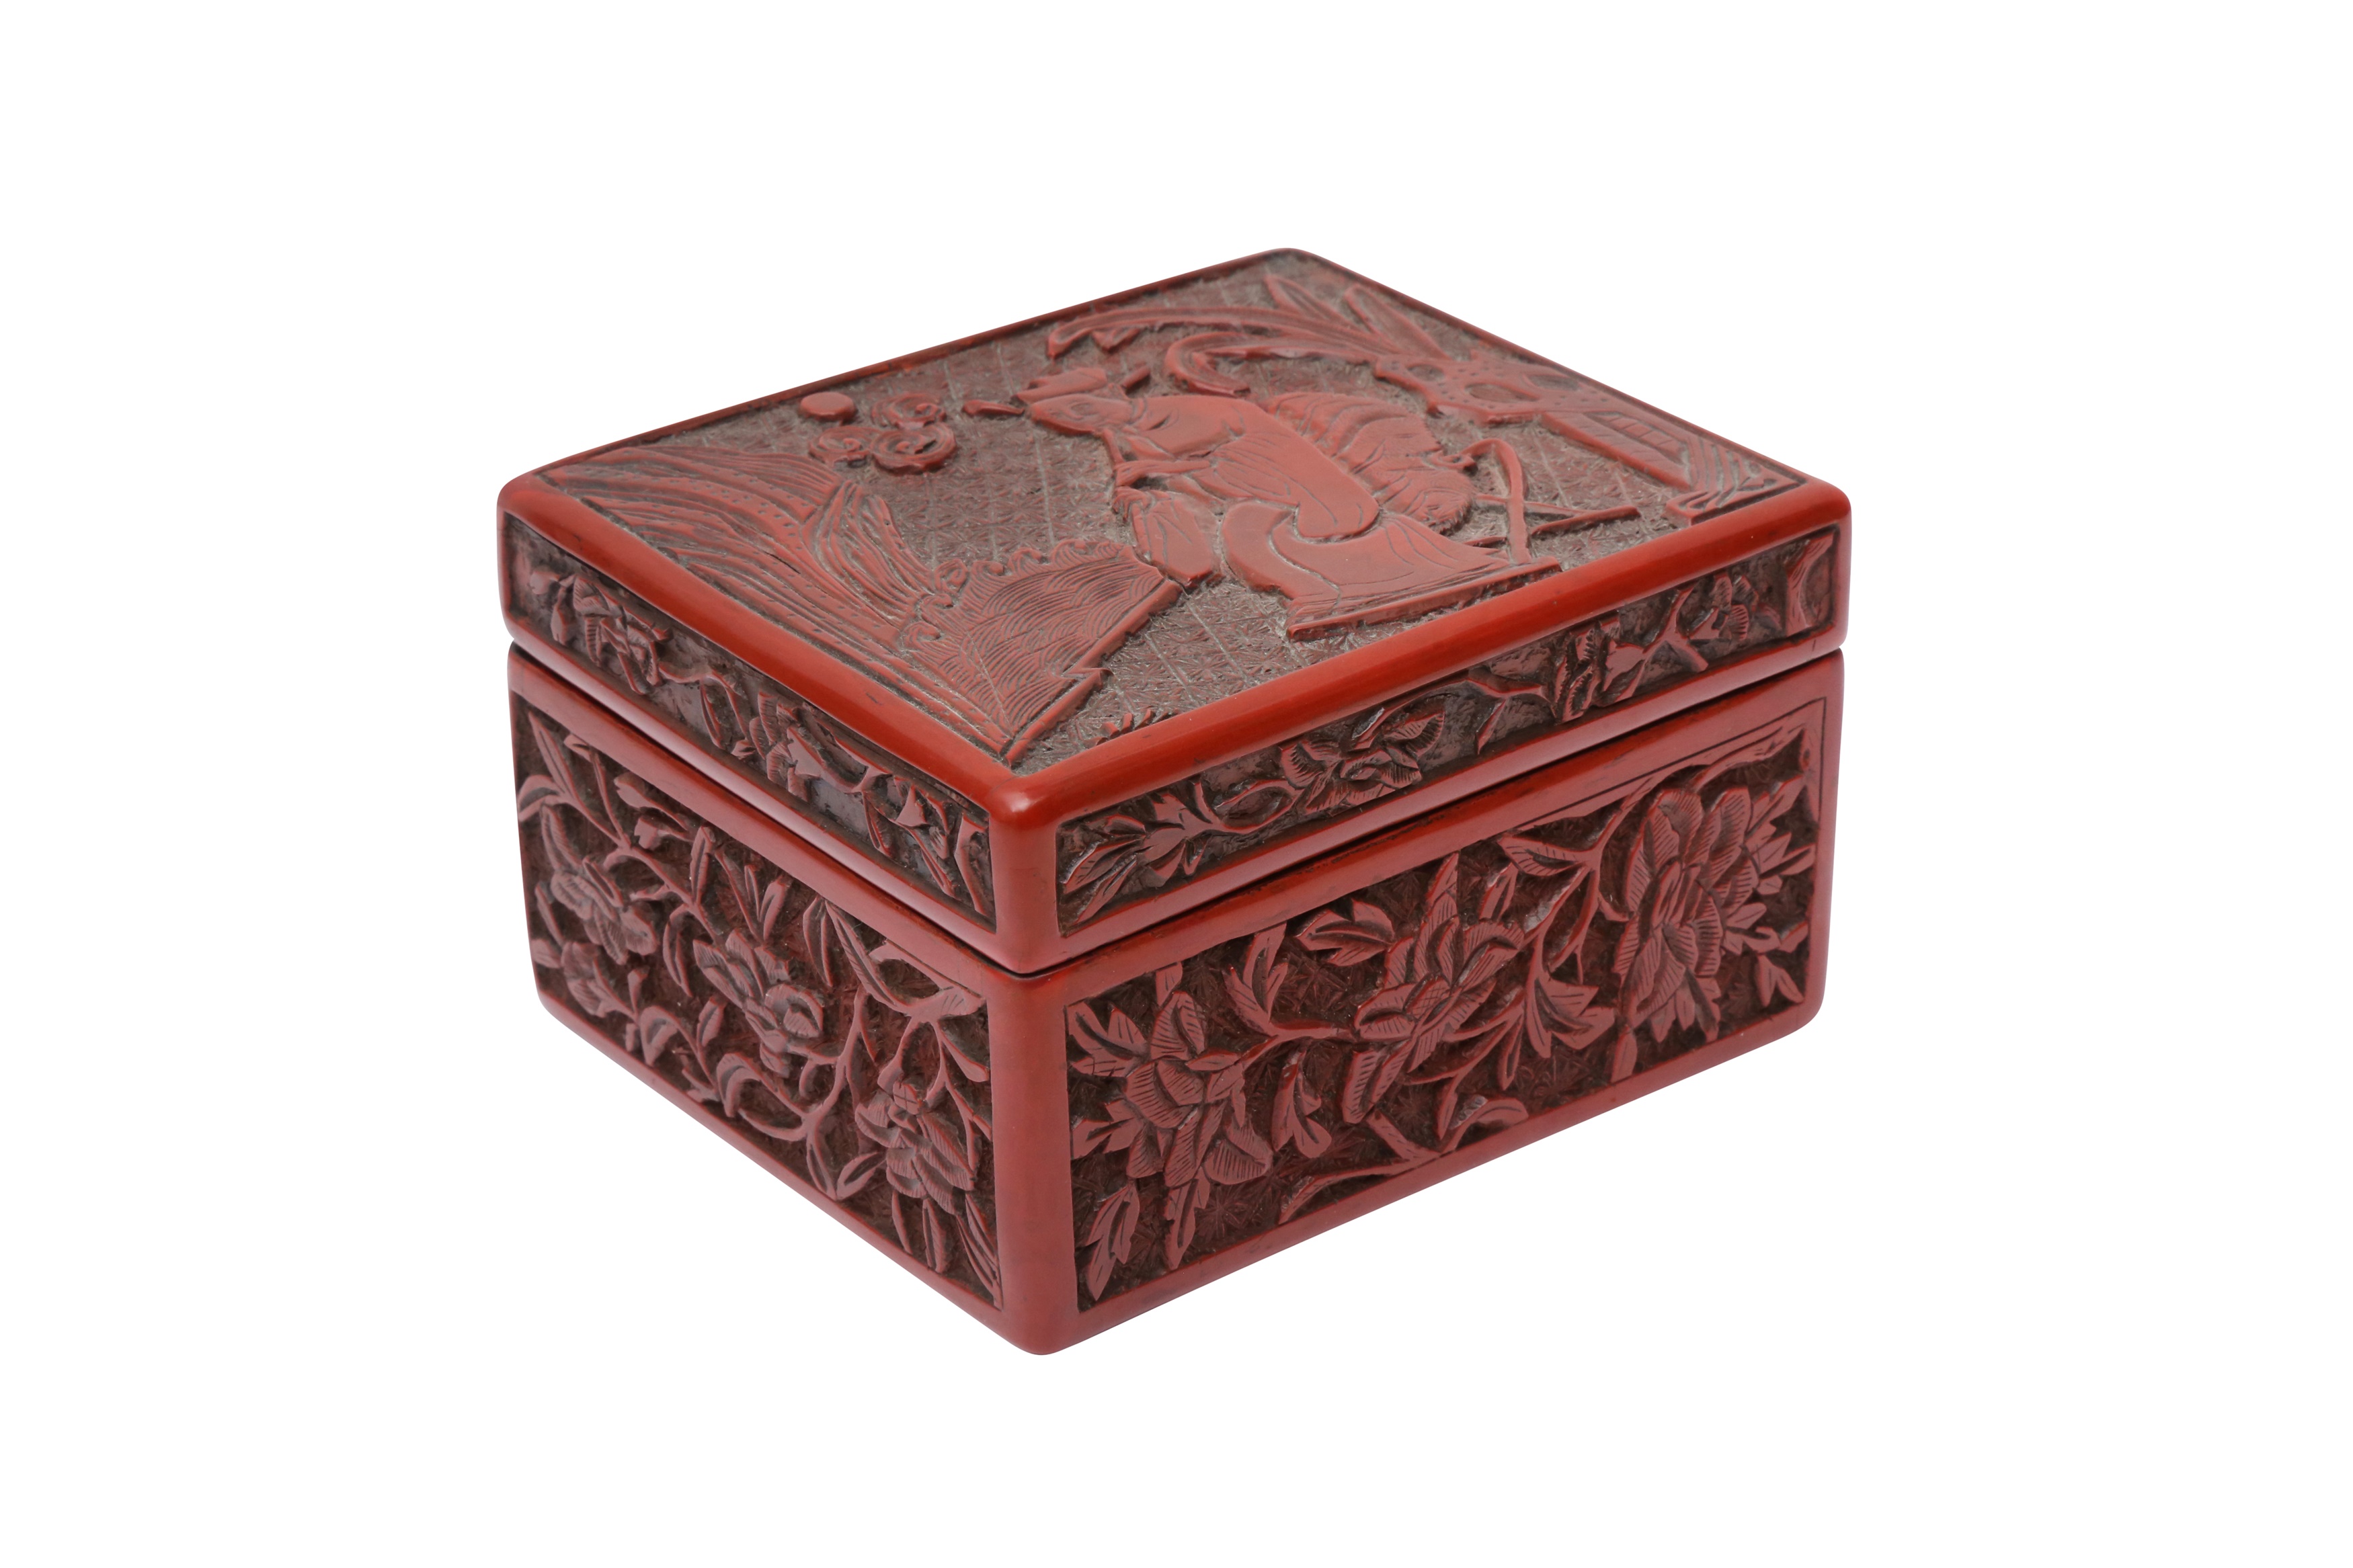 A CHINESE CINNABAR LACQUER 'MUSICIAN' BOX AND COVER 晚明 剔紅圖高士行樂圖紋蓋盒